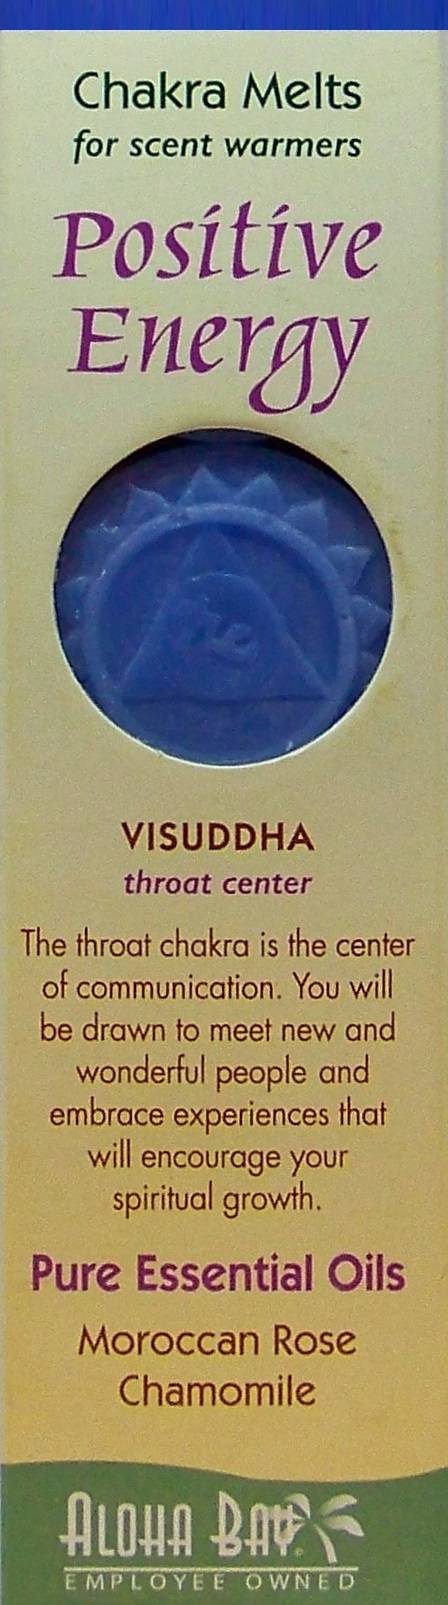 throat chakra positive energy candle melts from aloha bay